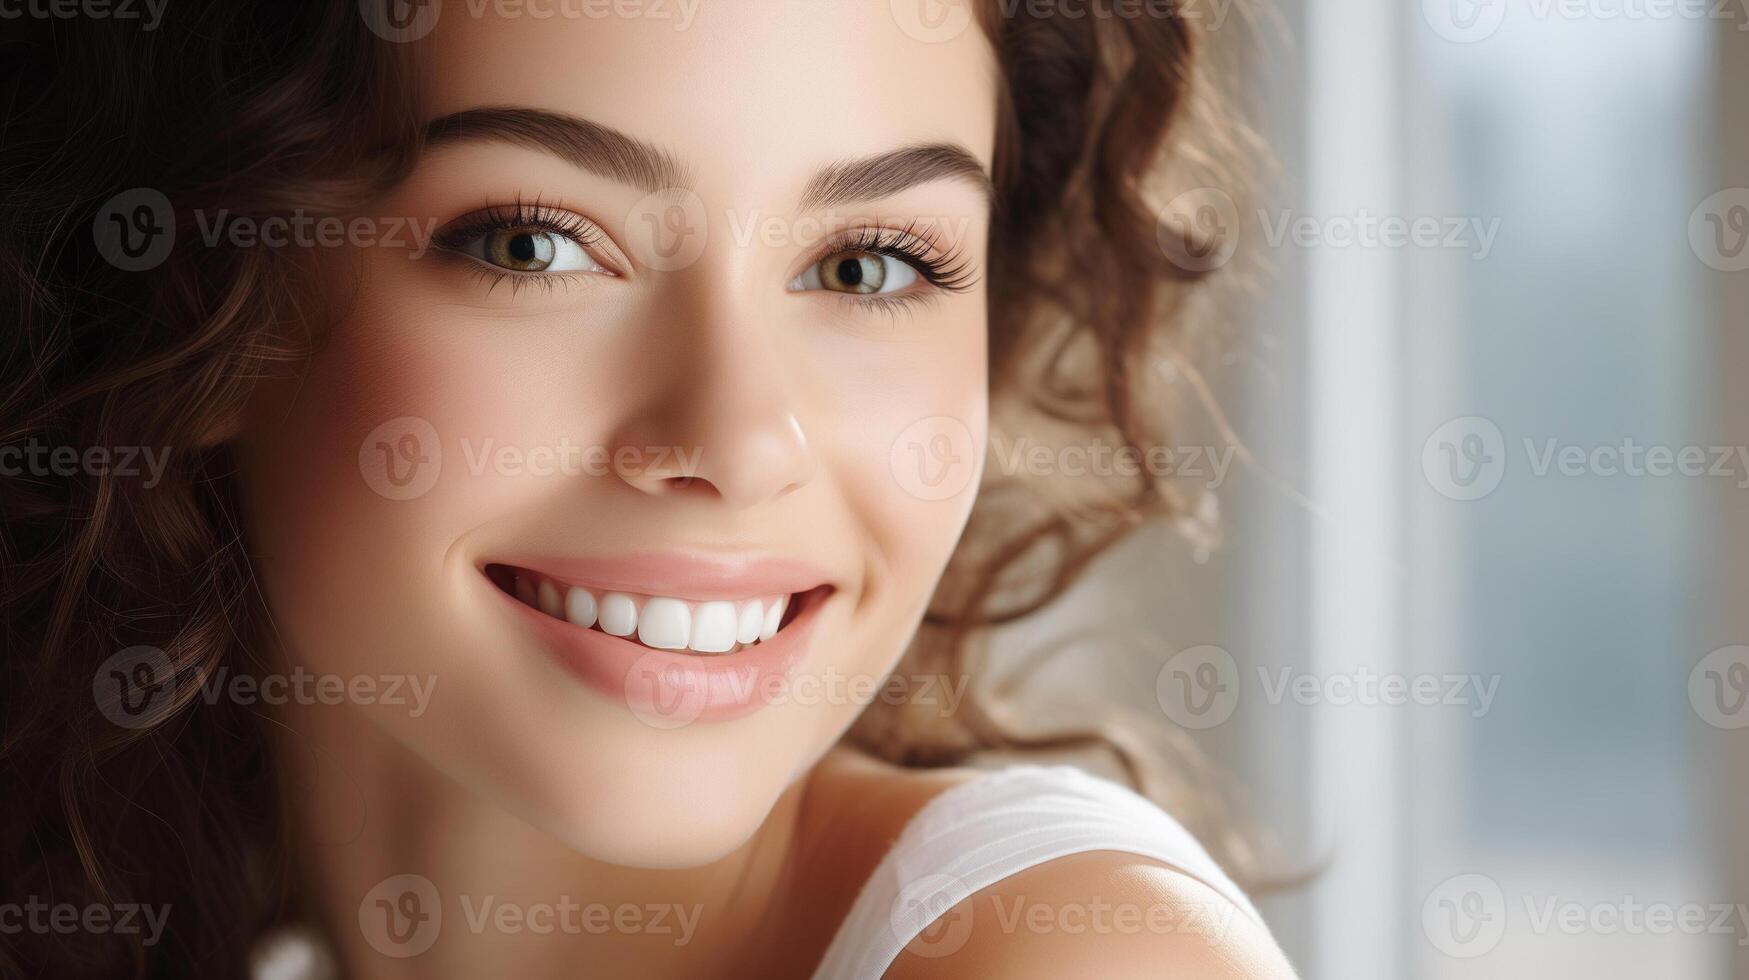 ai gegenereerd stralend jong vrouw met gekruld haar, stralend glimlach, licht gevuld achtergrond. foto